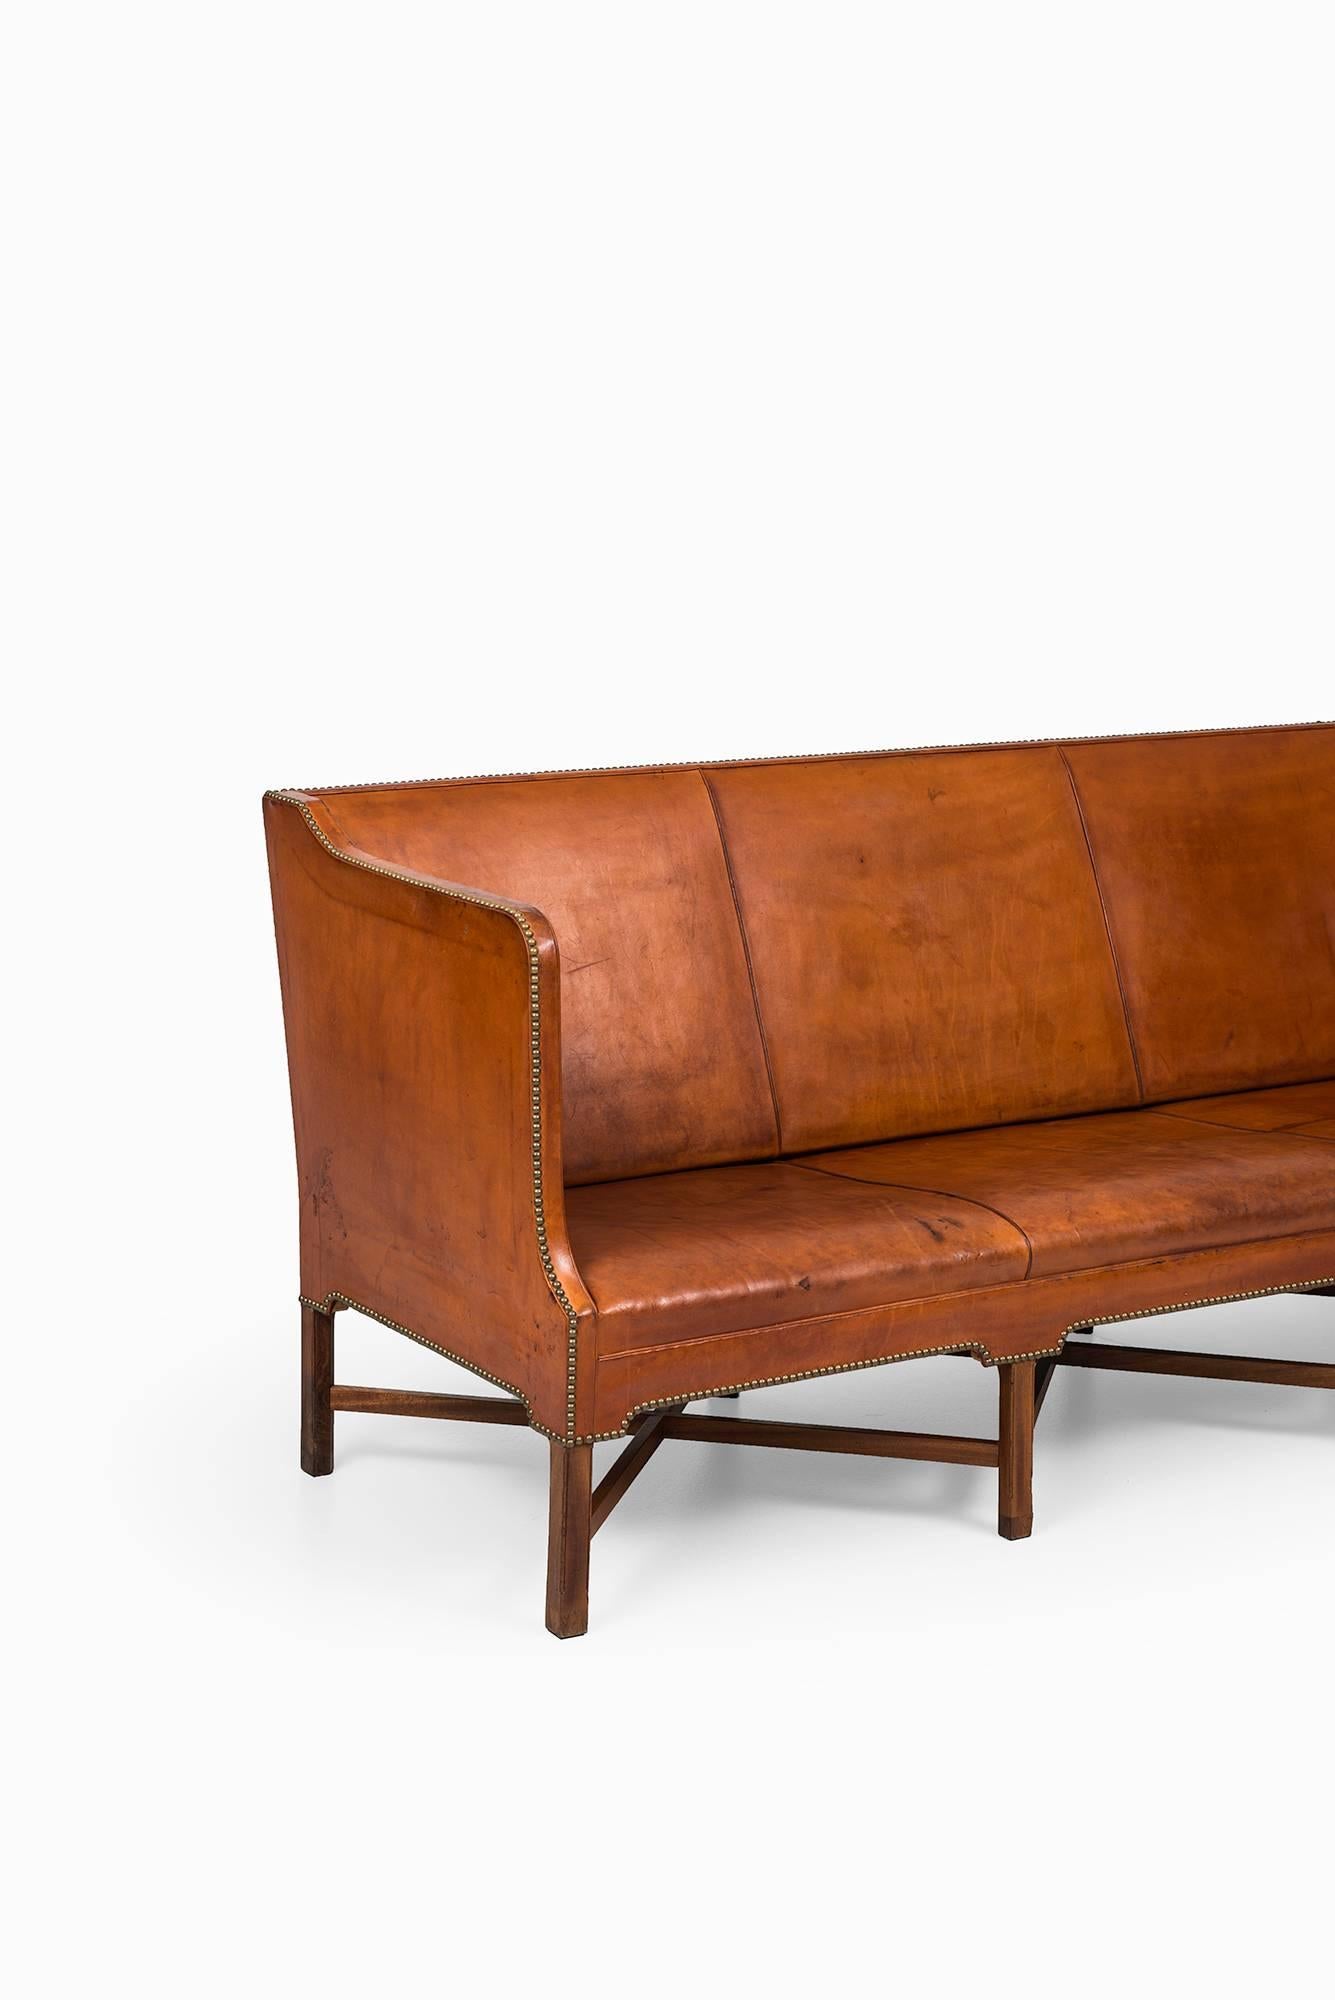 Leather Kaare Klint Sofa Model 4118 Produced by Rud Rasmussen in Denmark